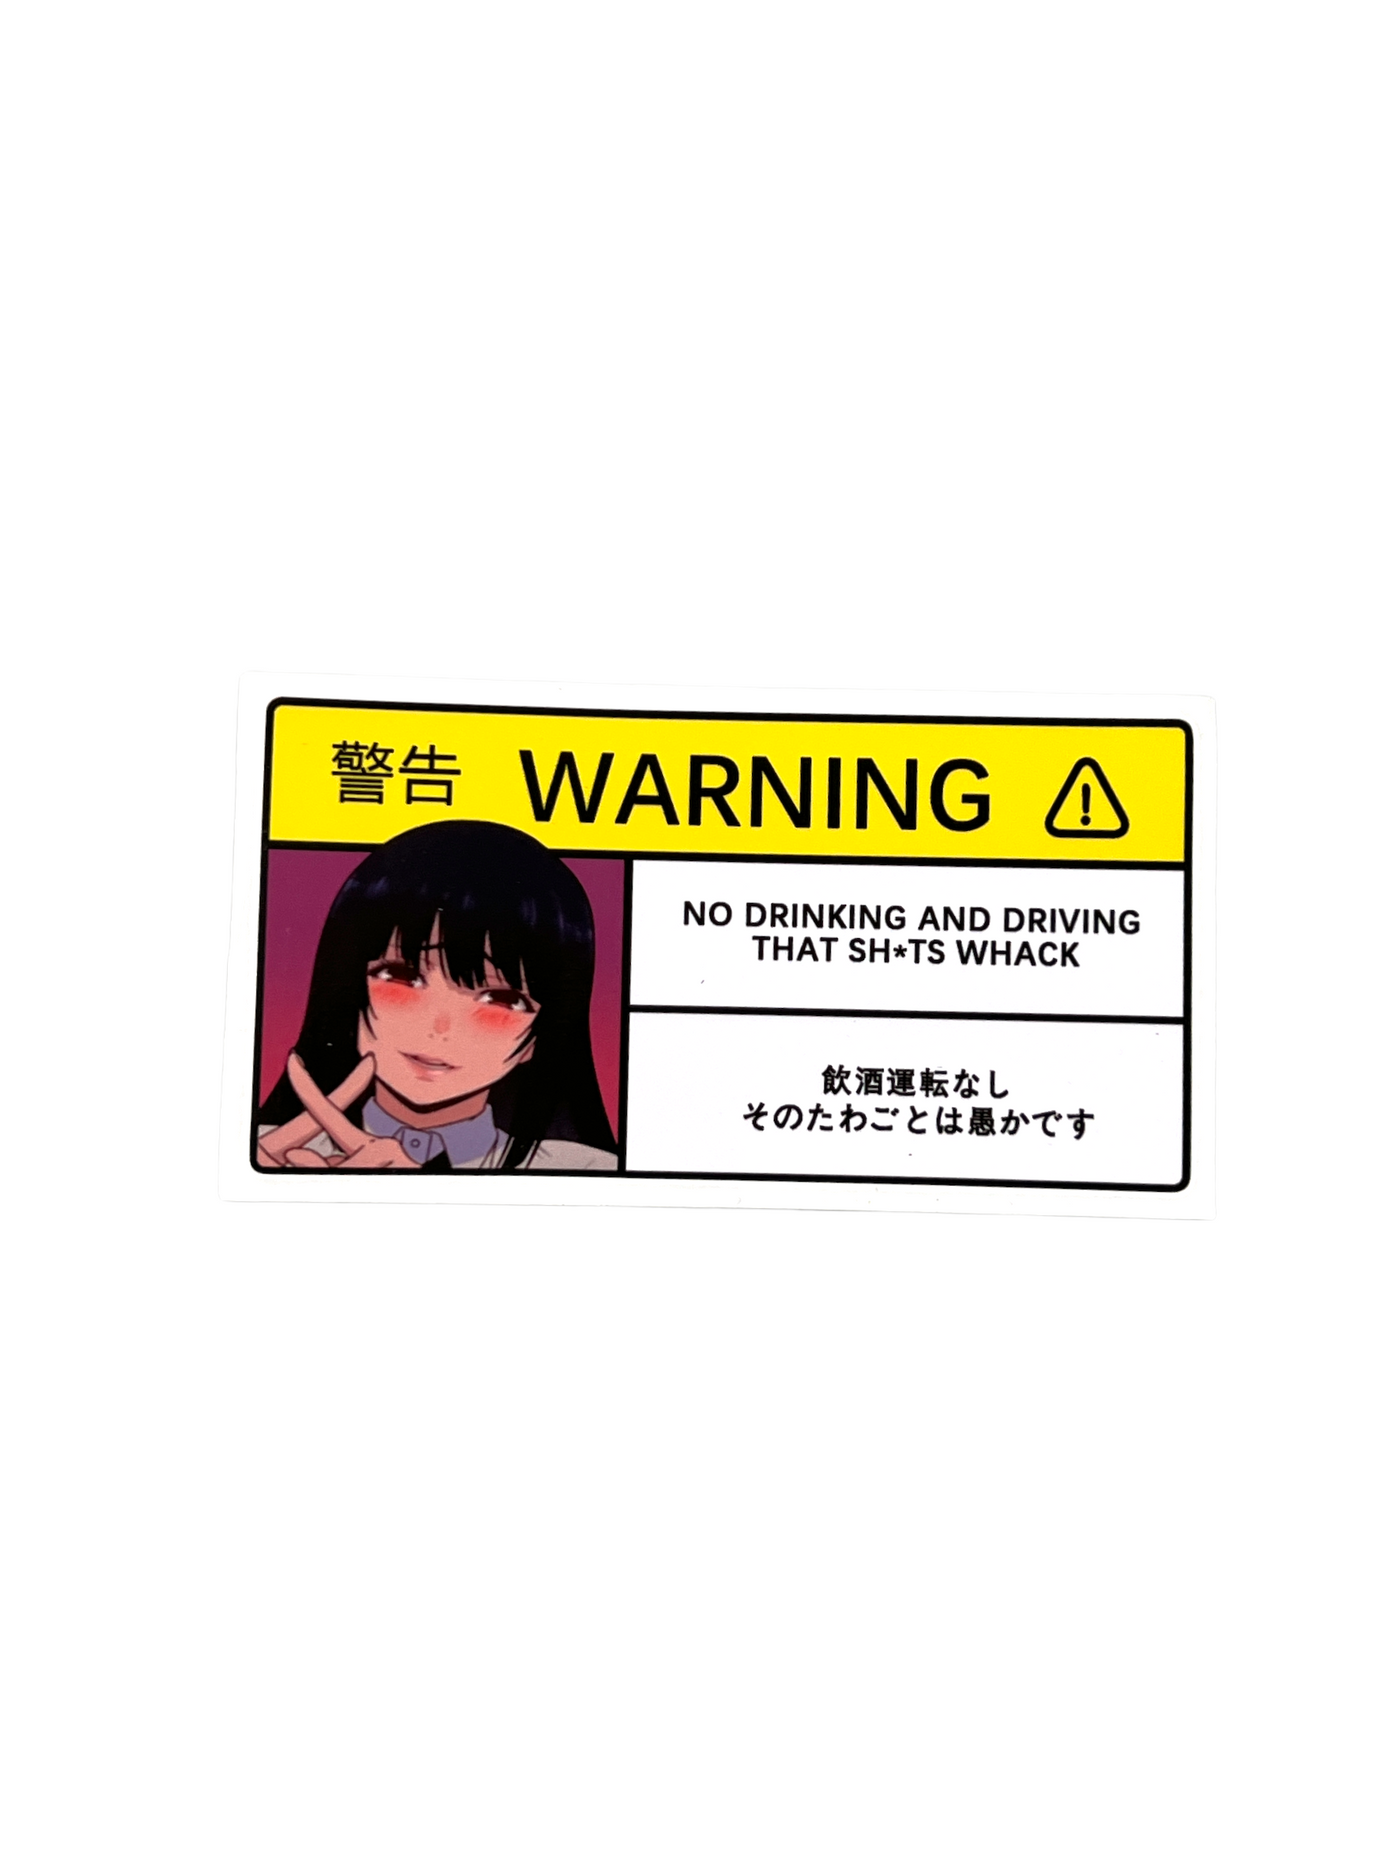 “Don’t Drink" Warning Sticker